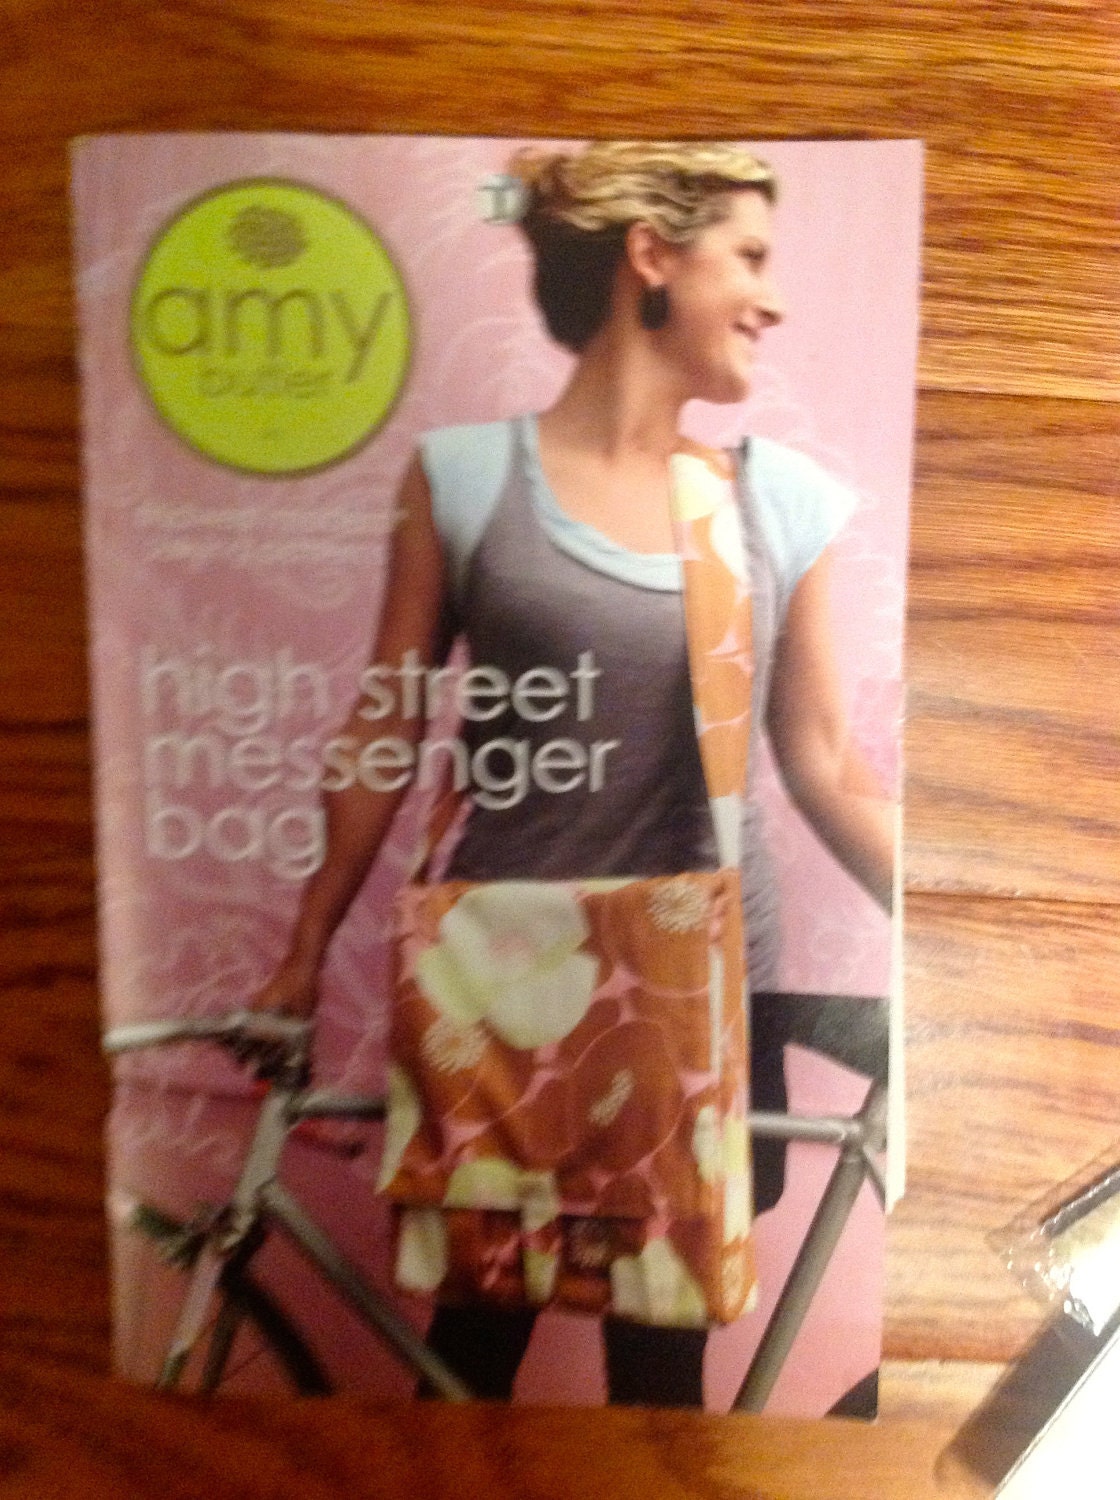 ... high street messenger bag Midwest modern sewing patterns on Etsy